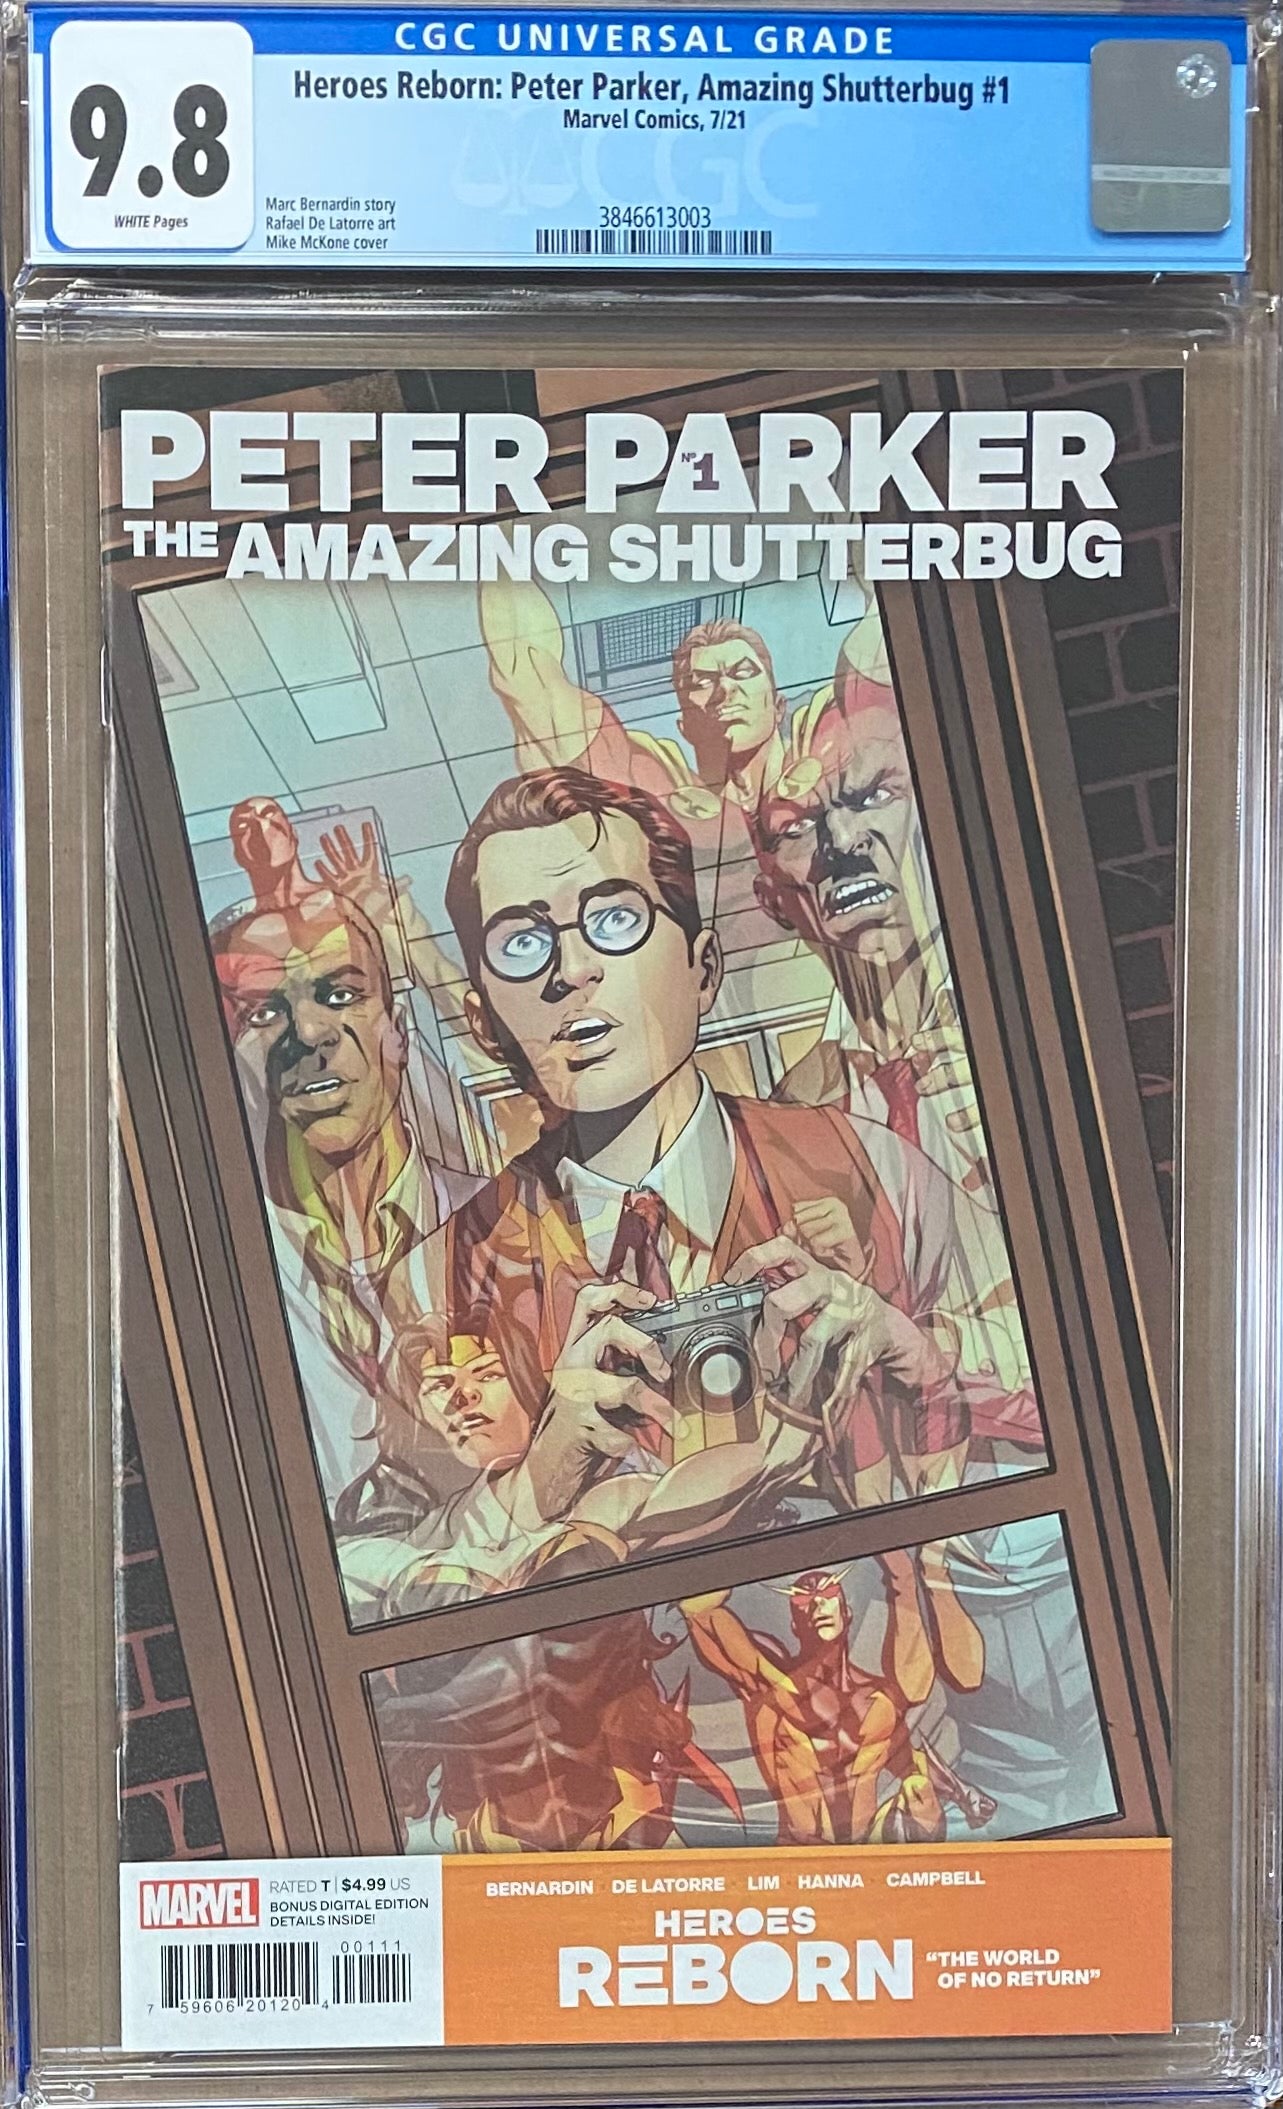 Heroes Reborn: Peter Parker - The Amazing Shutterbug #1 CGC 9.8